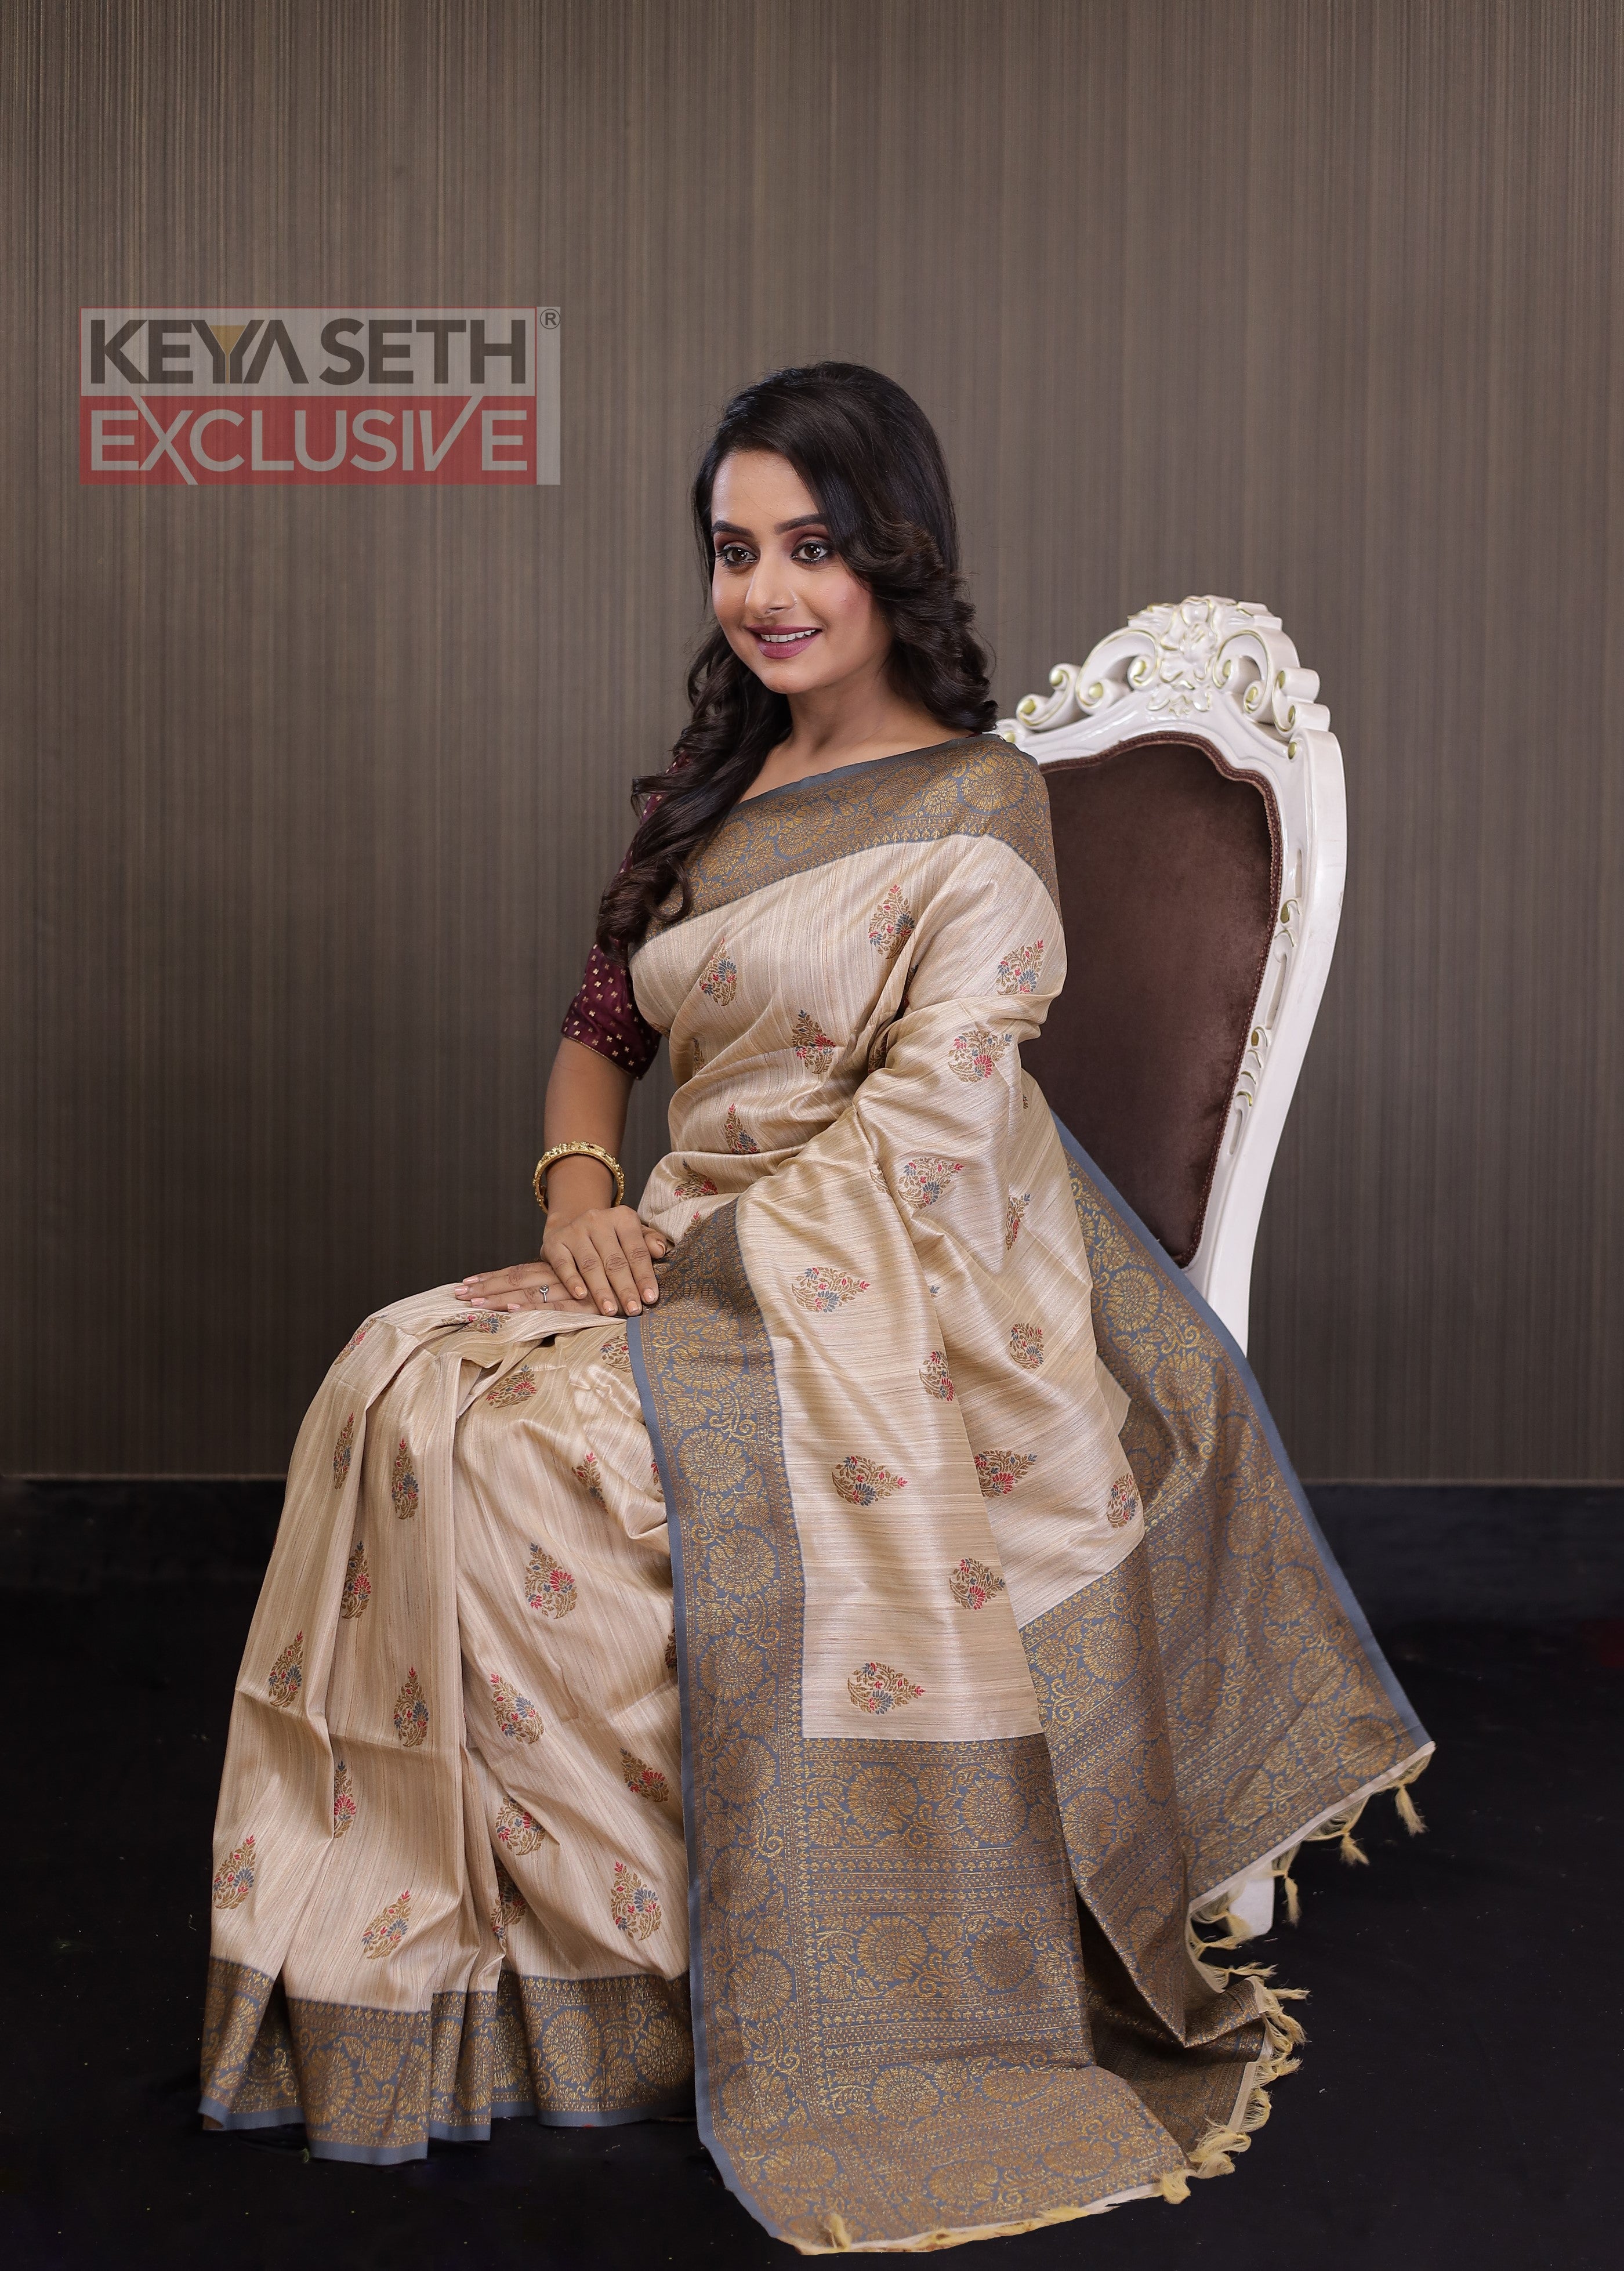 Keya Seth Exclusive in Kalighat,Kolkata - Best Wedding Saree Retailers in  Kolkata - Justdial